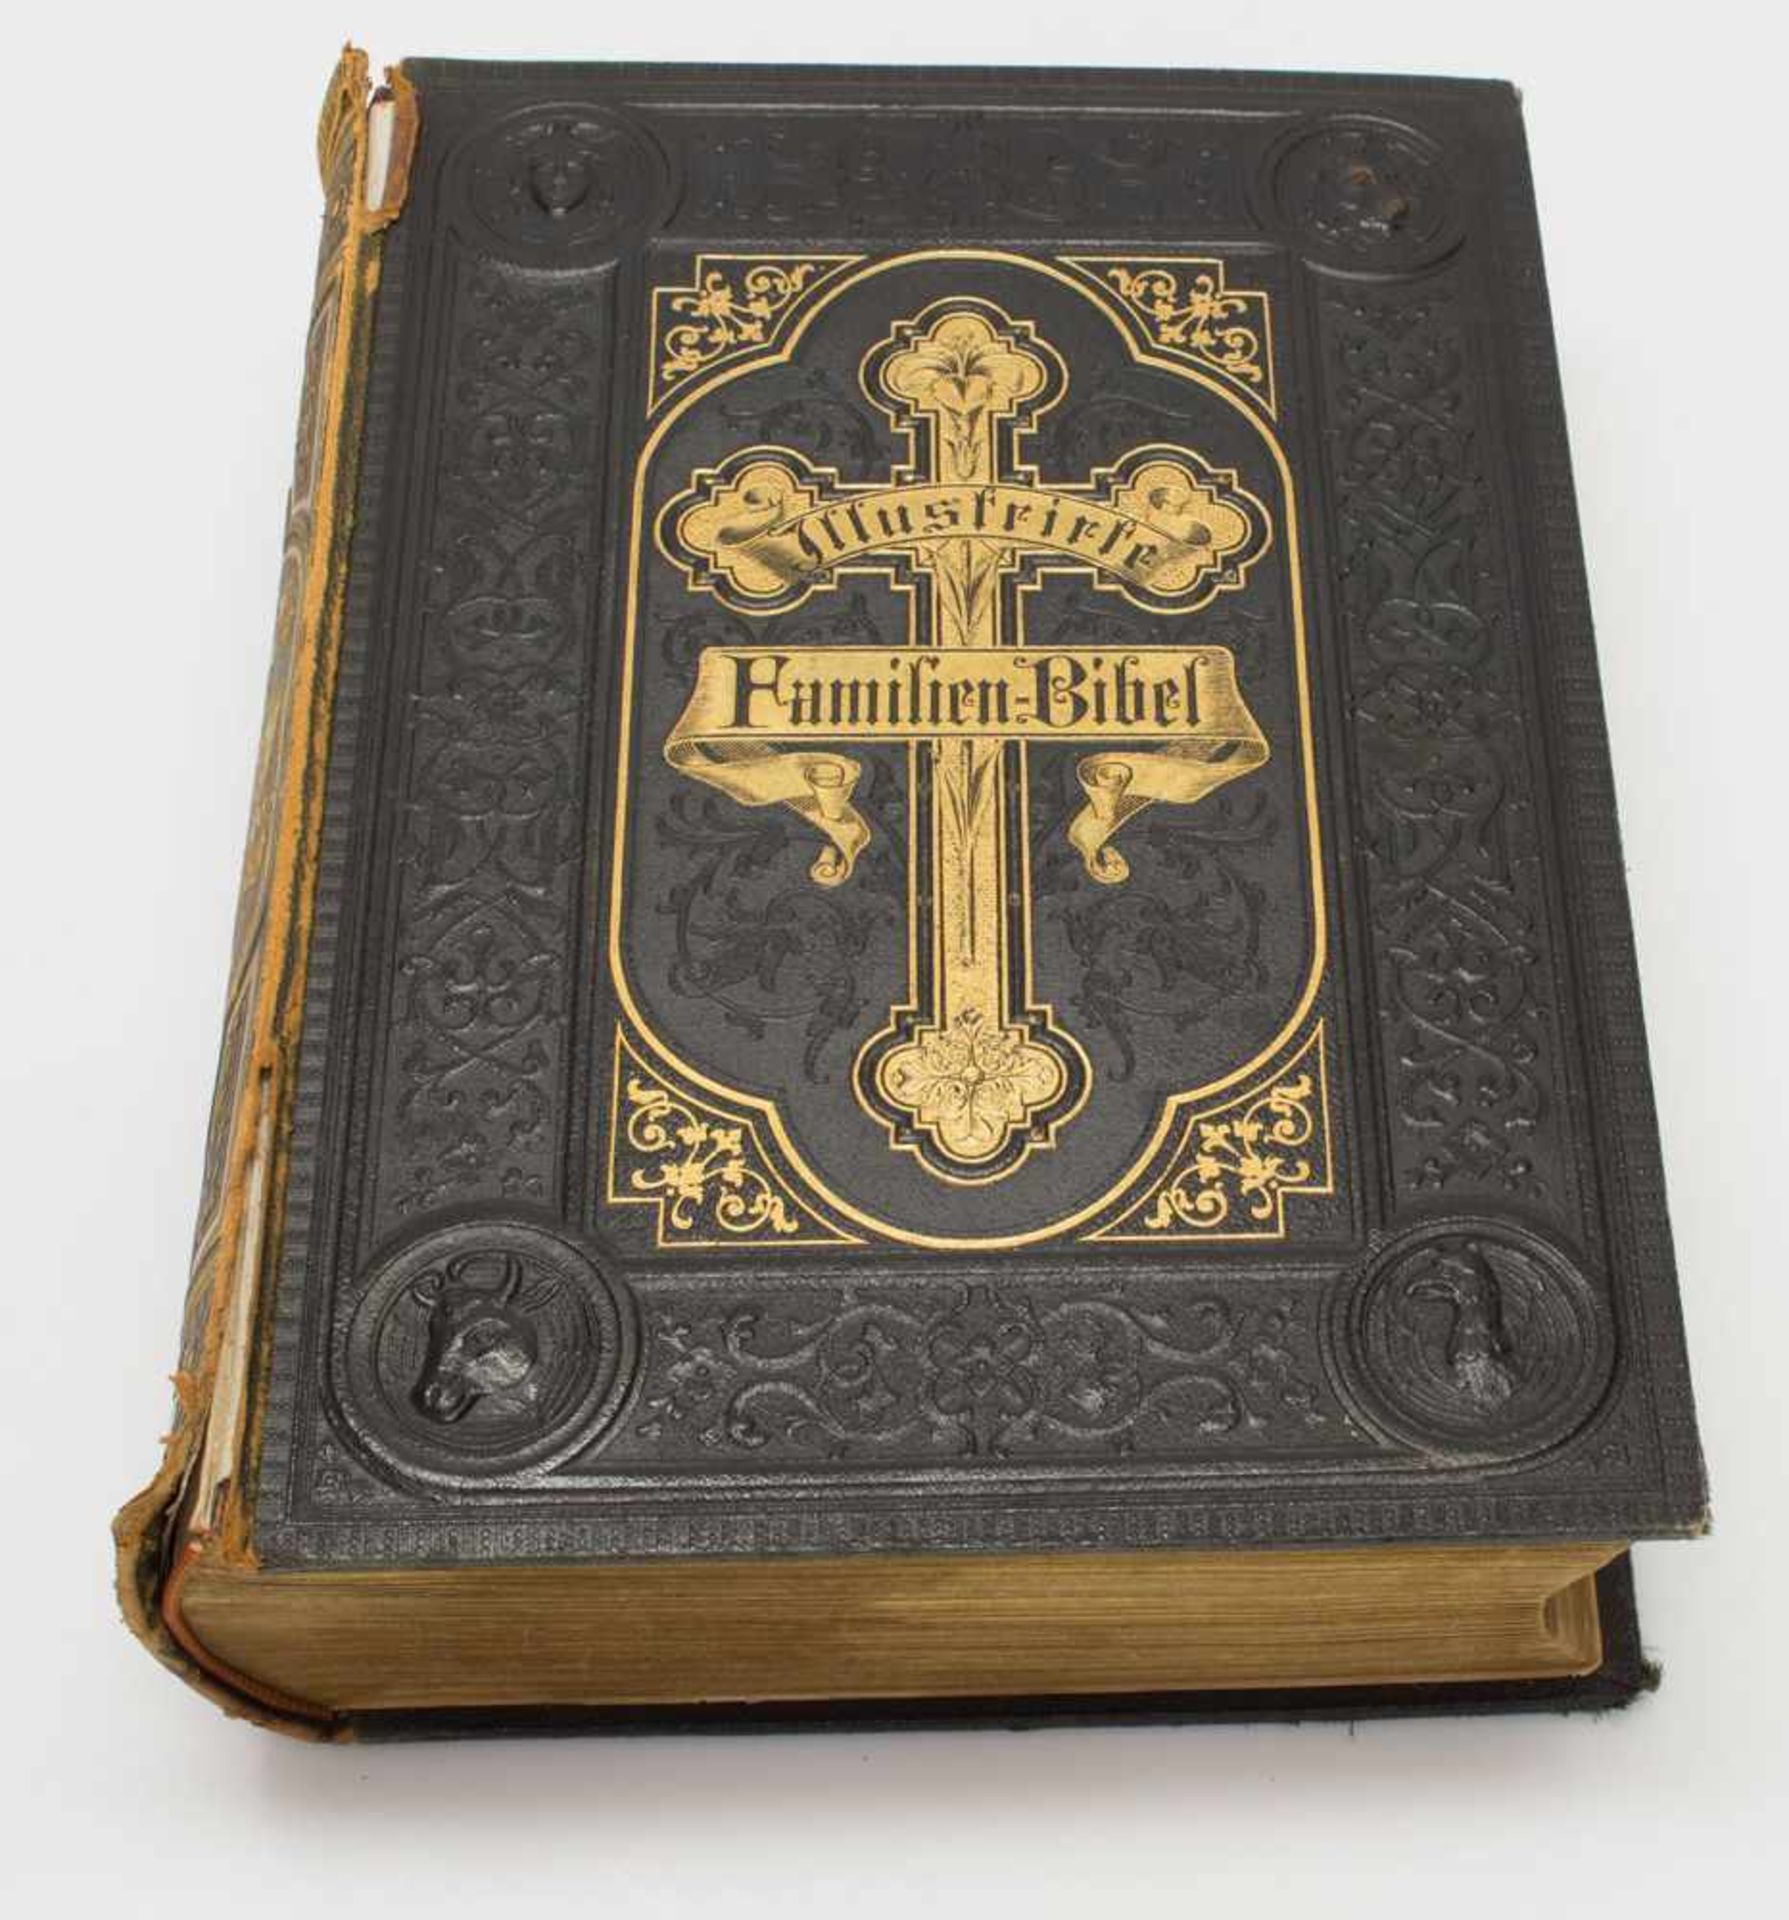 Herausgeber„Illustrierte Familien - Bibel“, Verlag A.H.Payne/ Leipzig o.J. (um 1890), 1816 S. mit